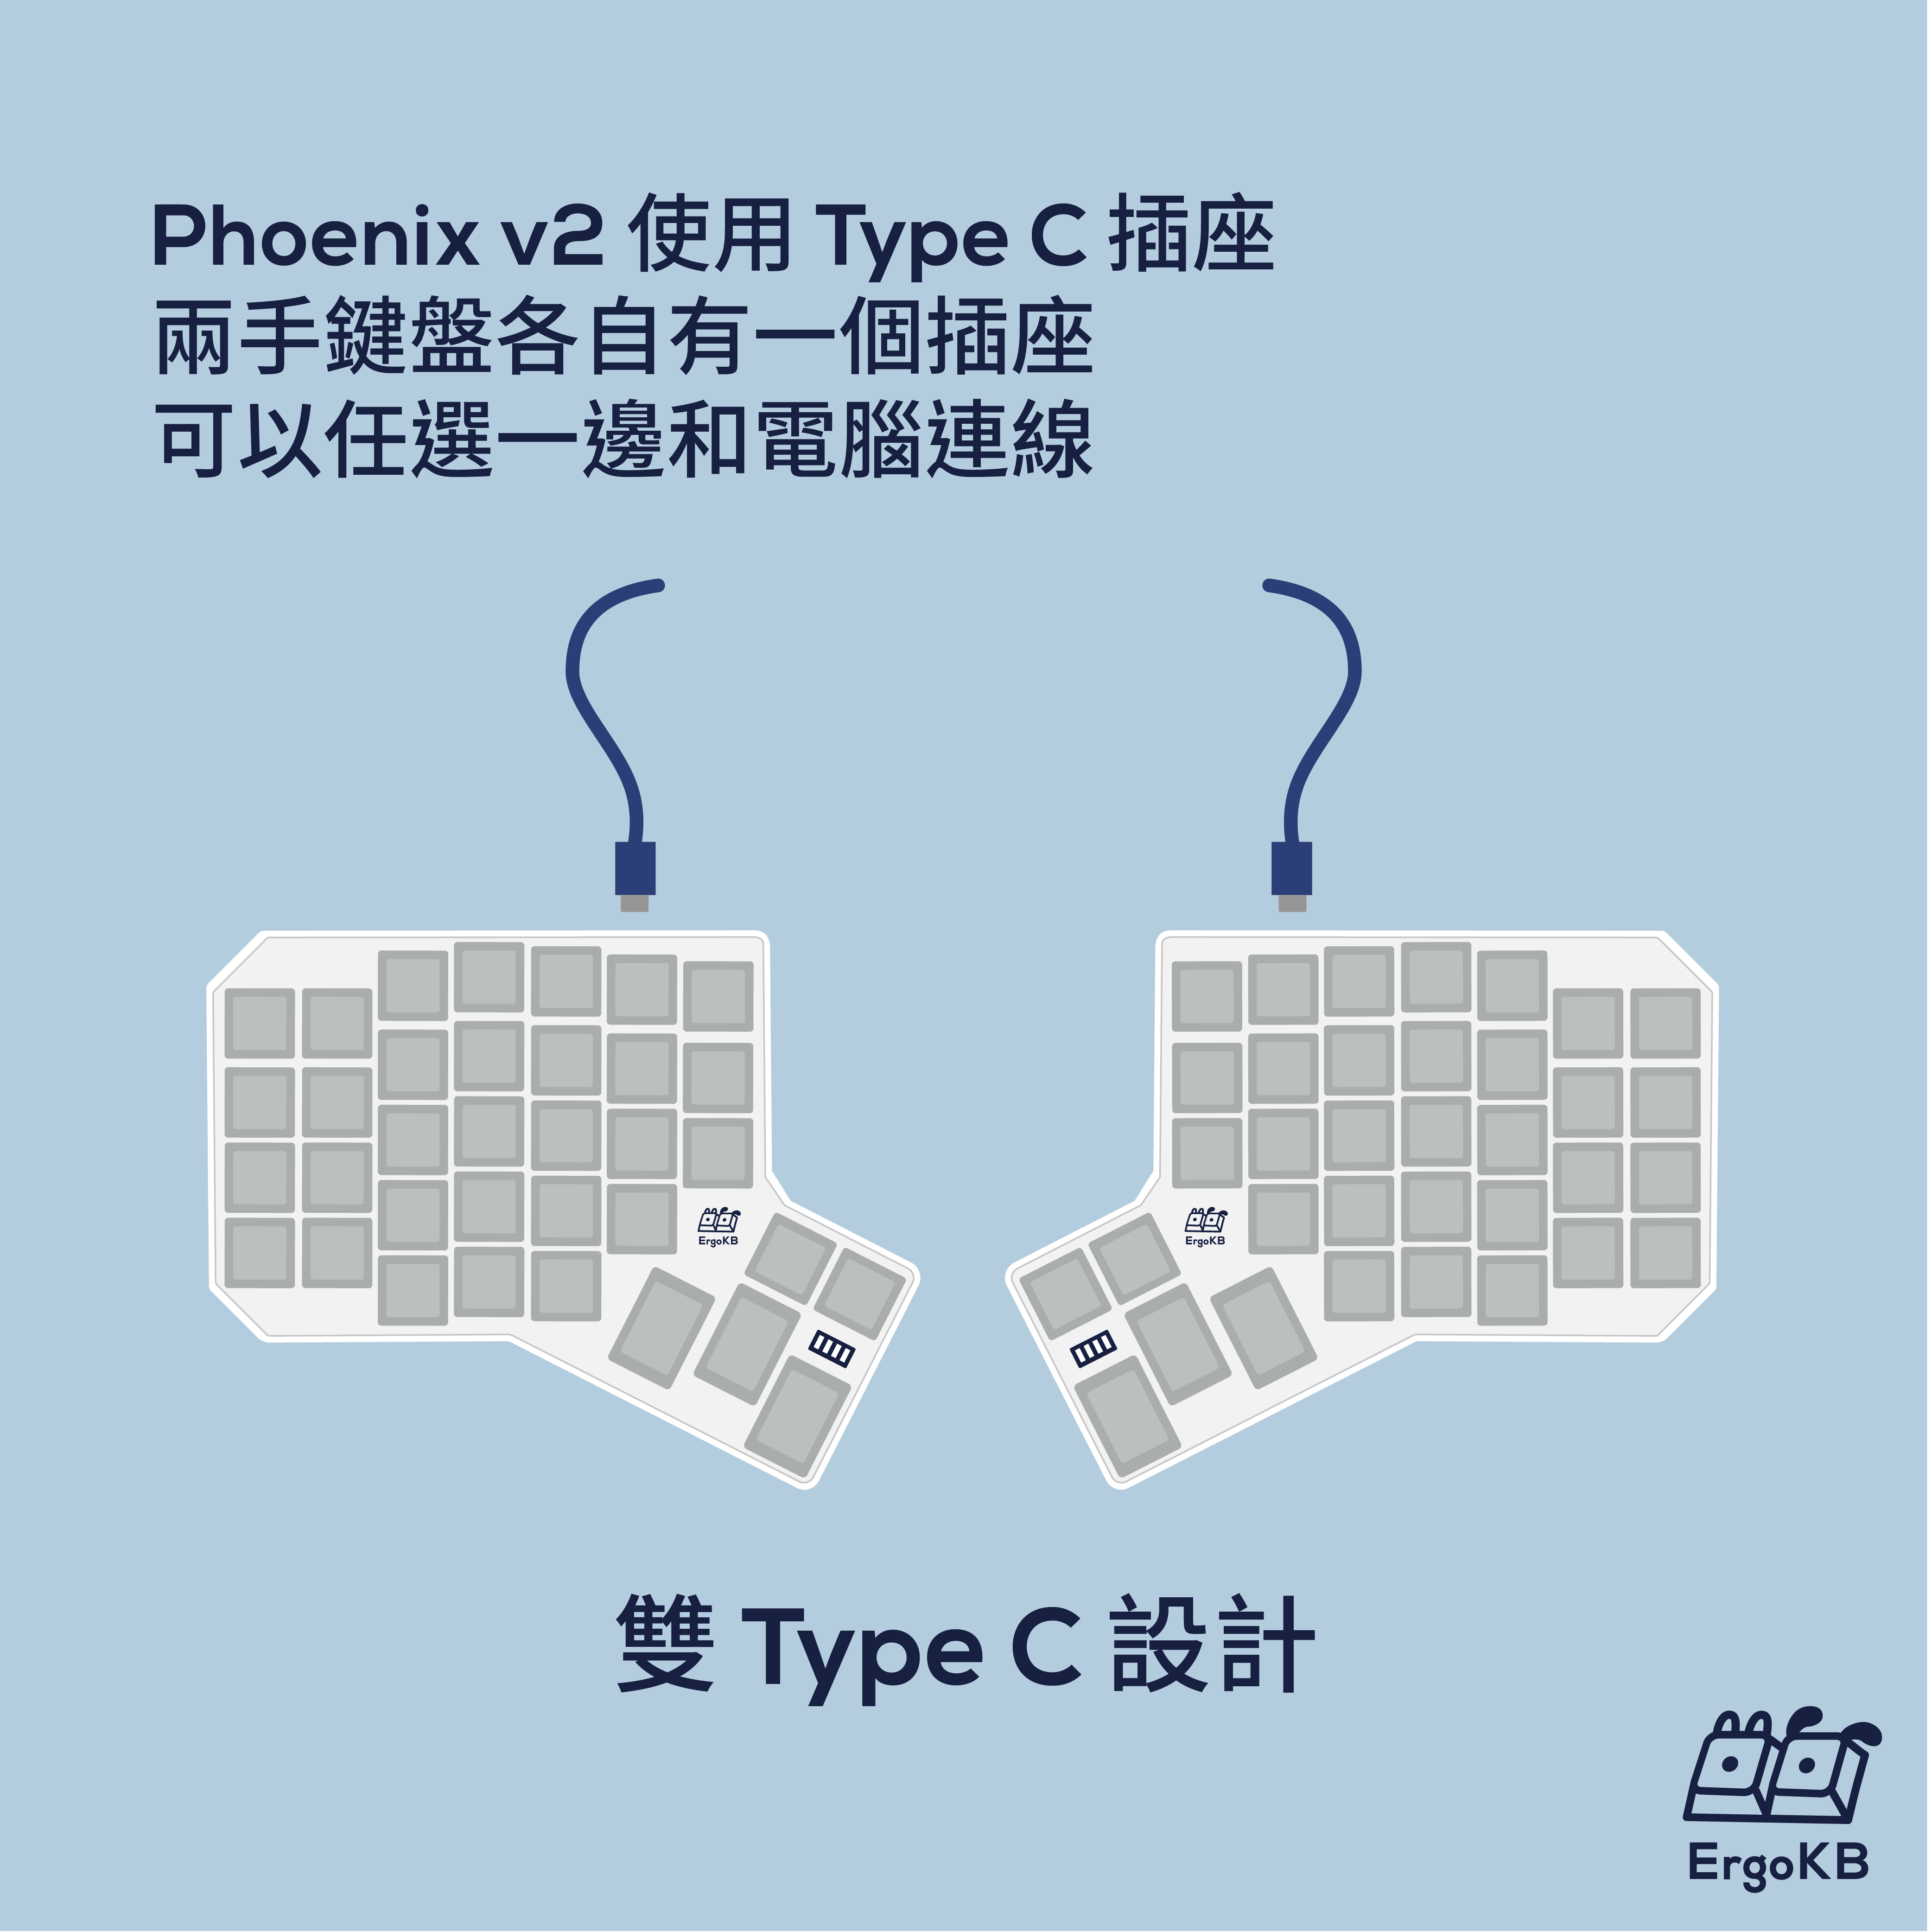 Phoenix 使用 Type C 插座，兩首鍵盤各自有一個插座，可以任選一邊和電腦連線